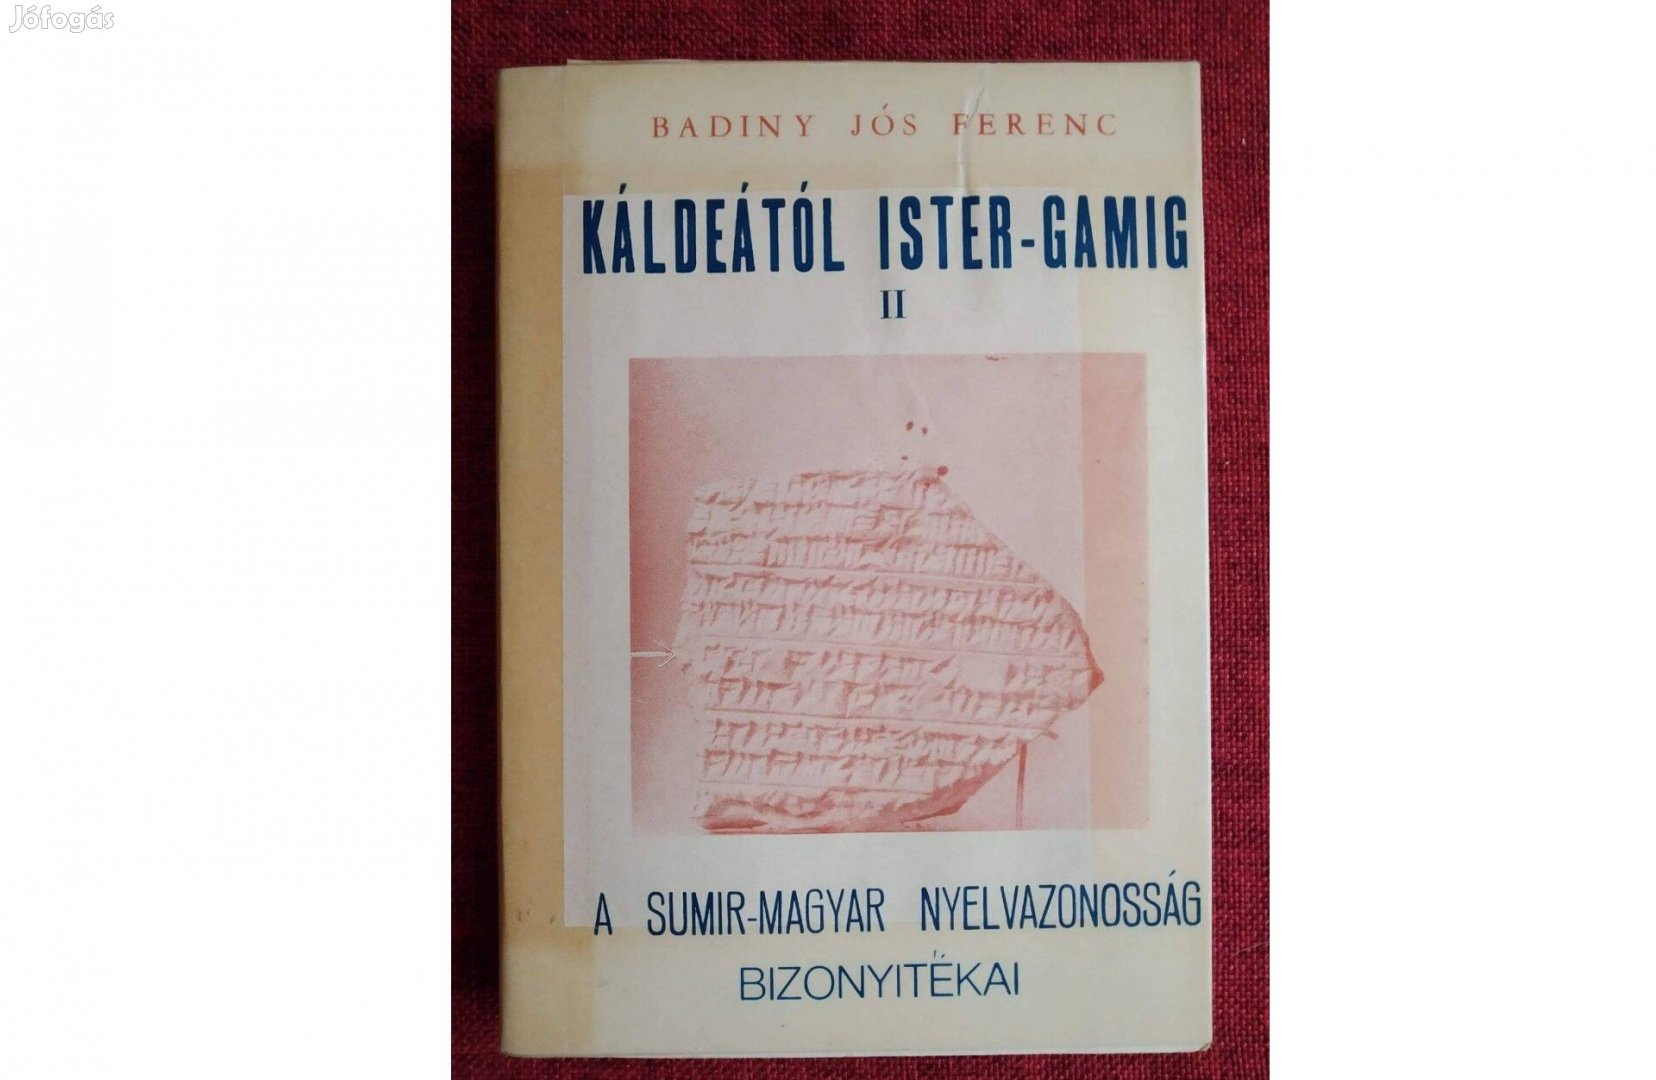 Káldeától Ister-Gamig II. A sumir-magyar nyelvazonosság bizonyítéka